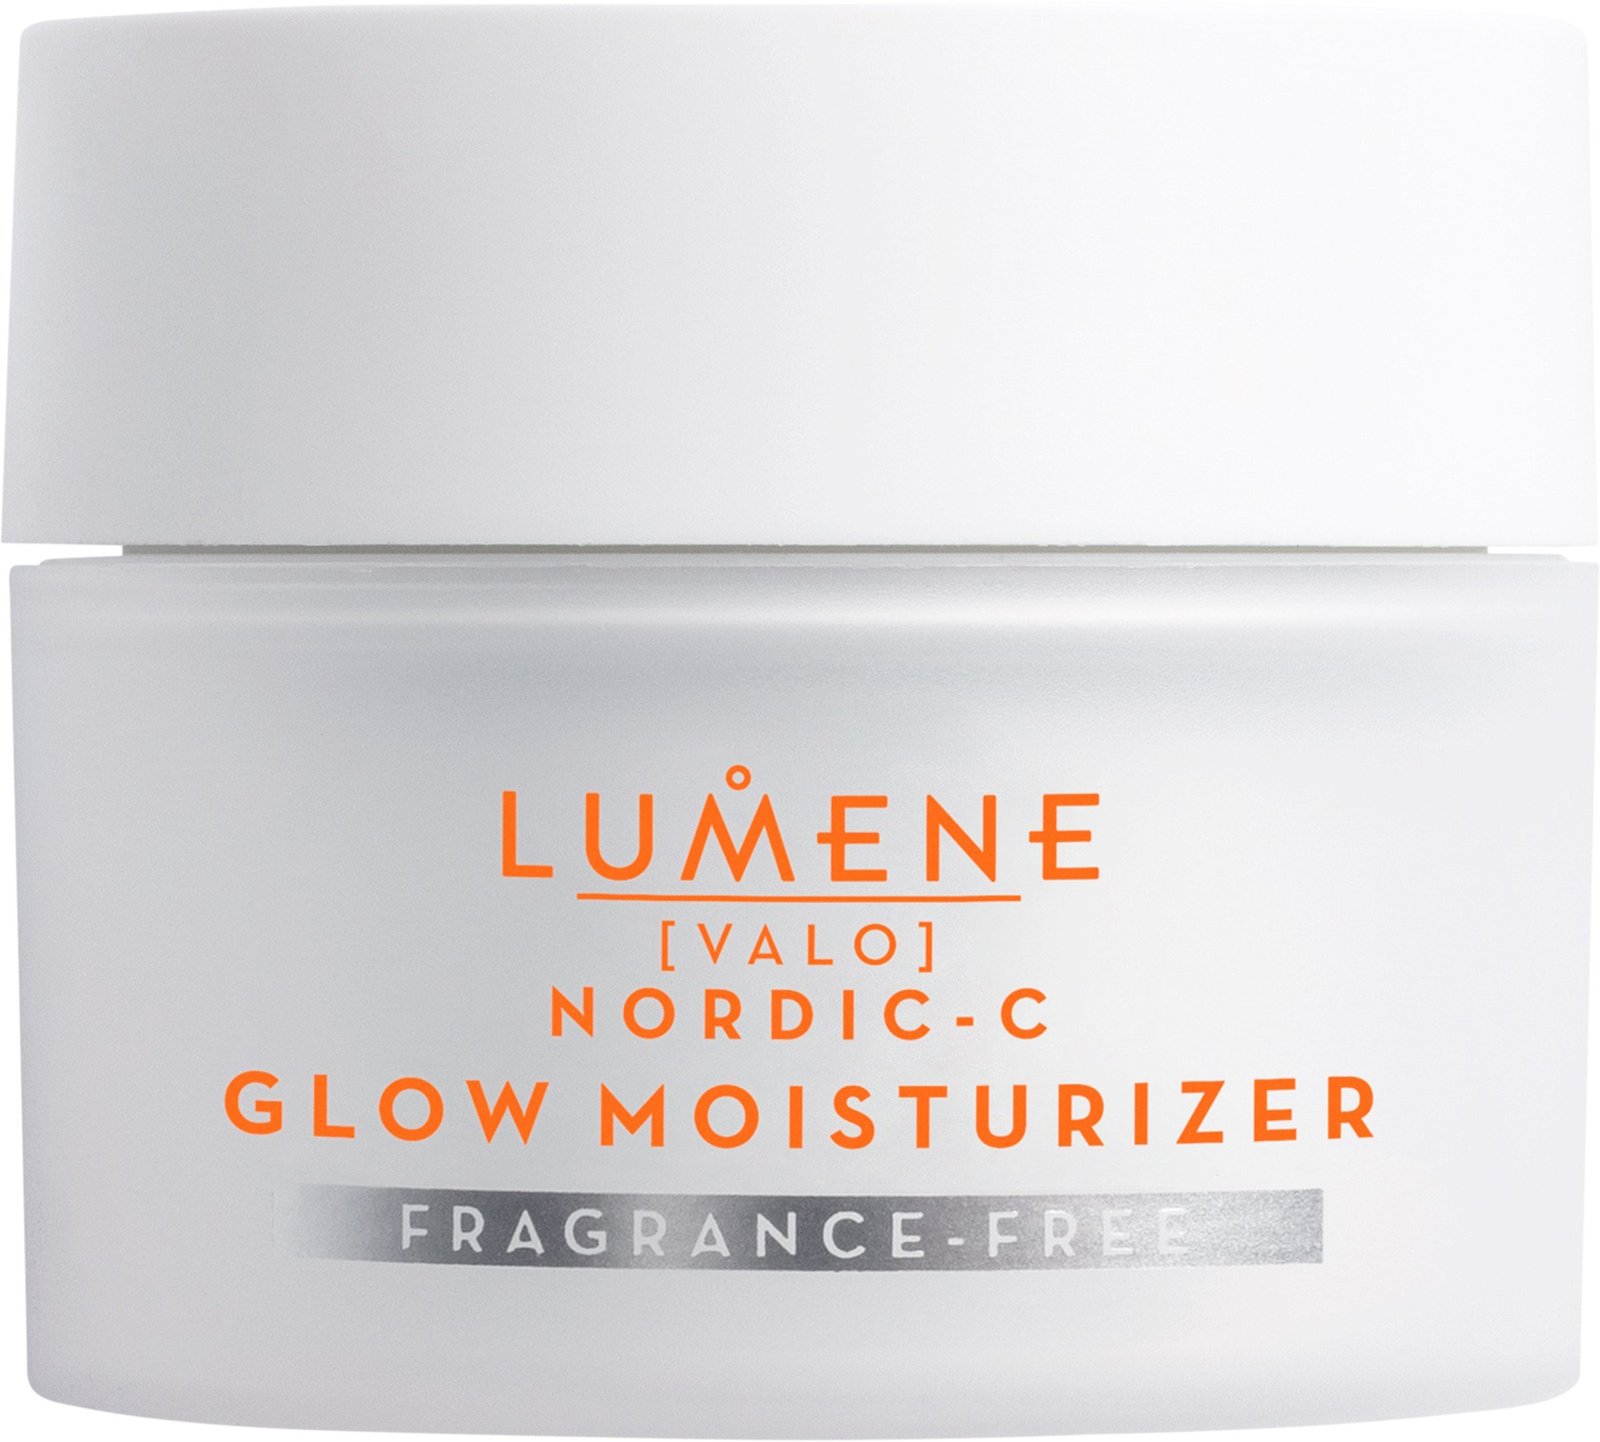 Lumene Valo Nordic-C Glow Moisturizer Fragrance-Free 50 ml